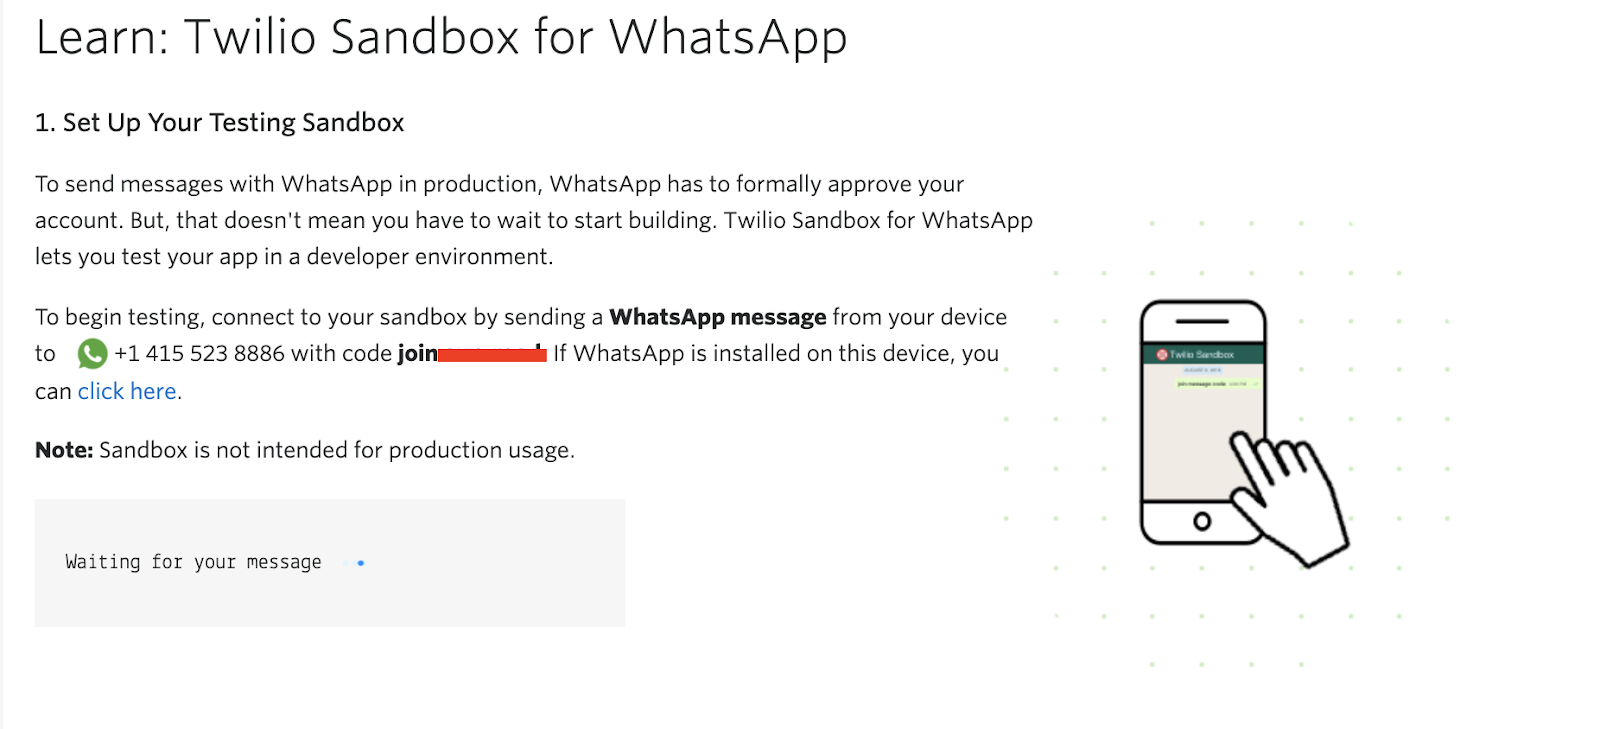 Twilio Sandbox for WhatsApp